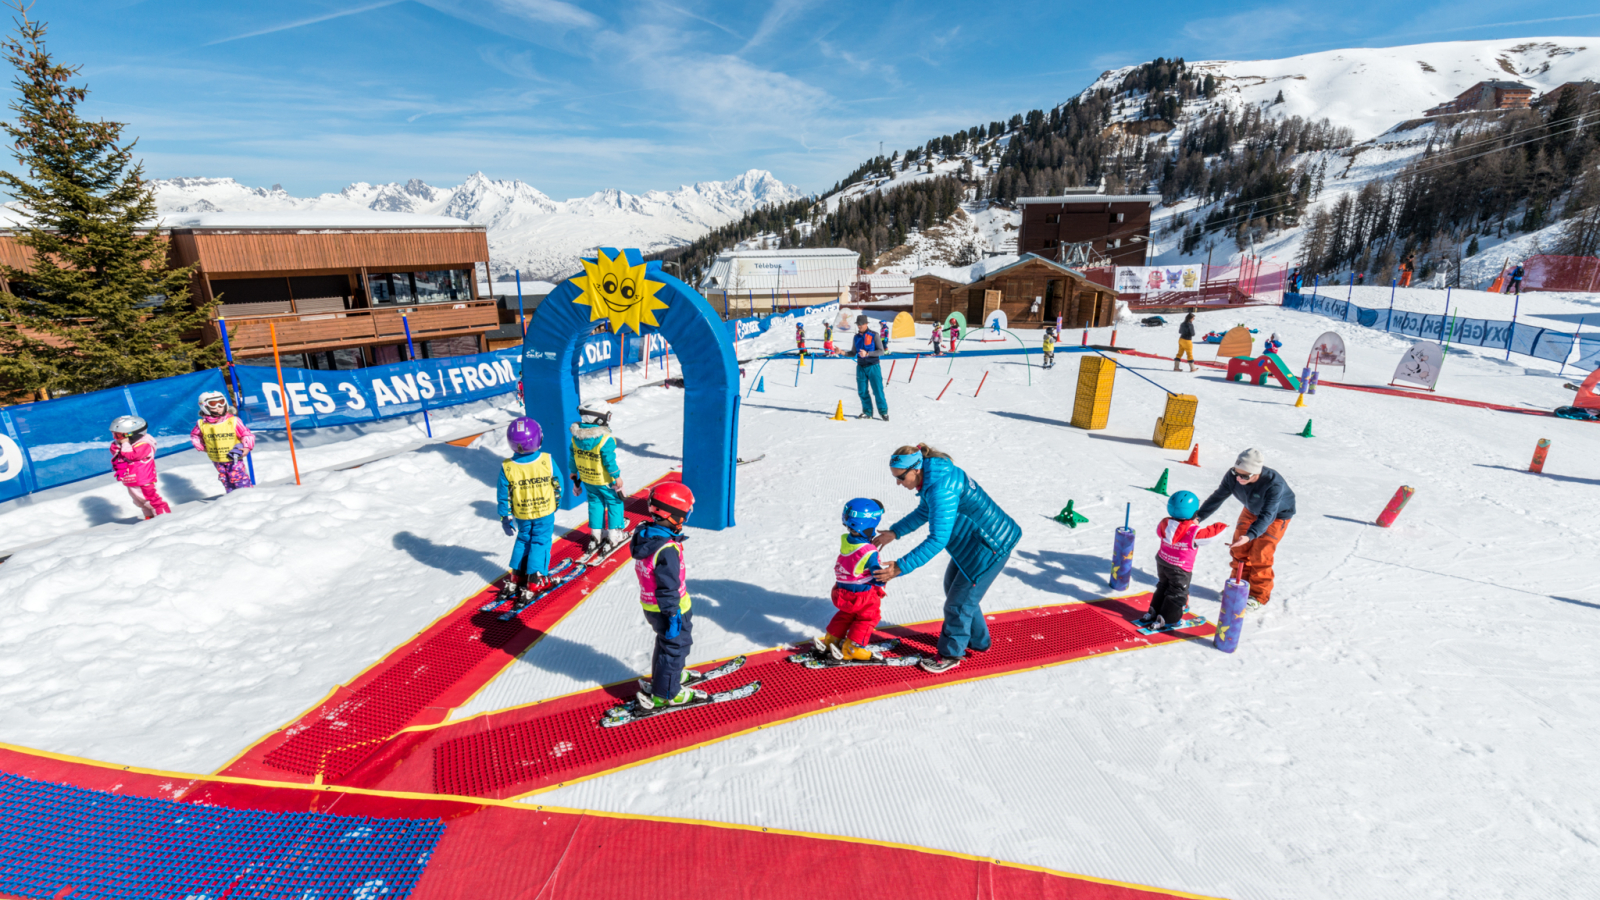 Oxygene snowgarden is a specially designed enclosed ski area.